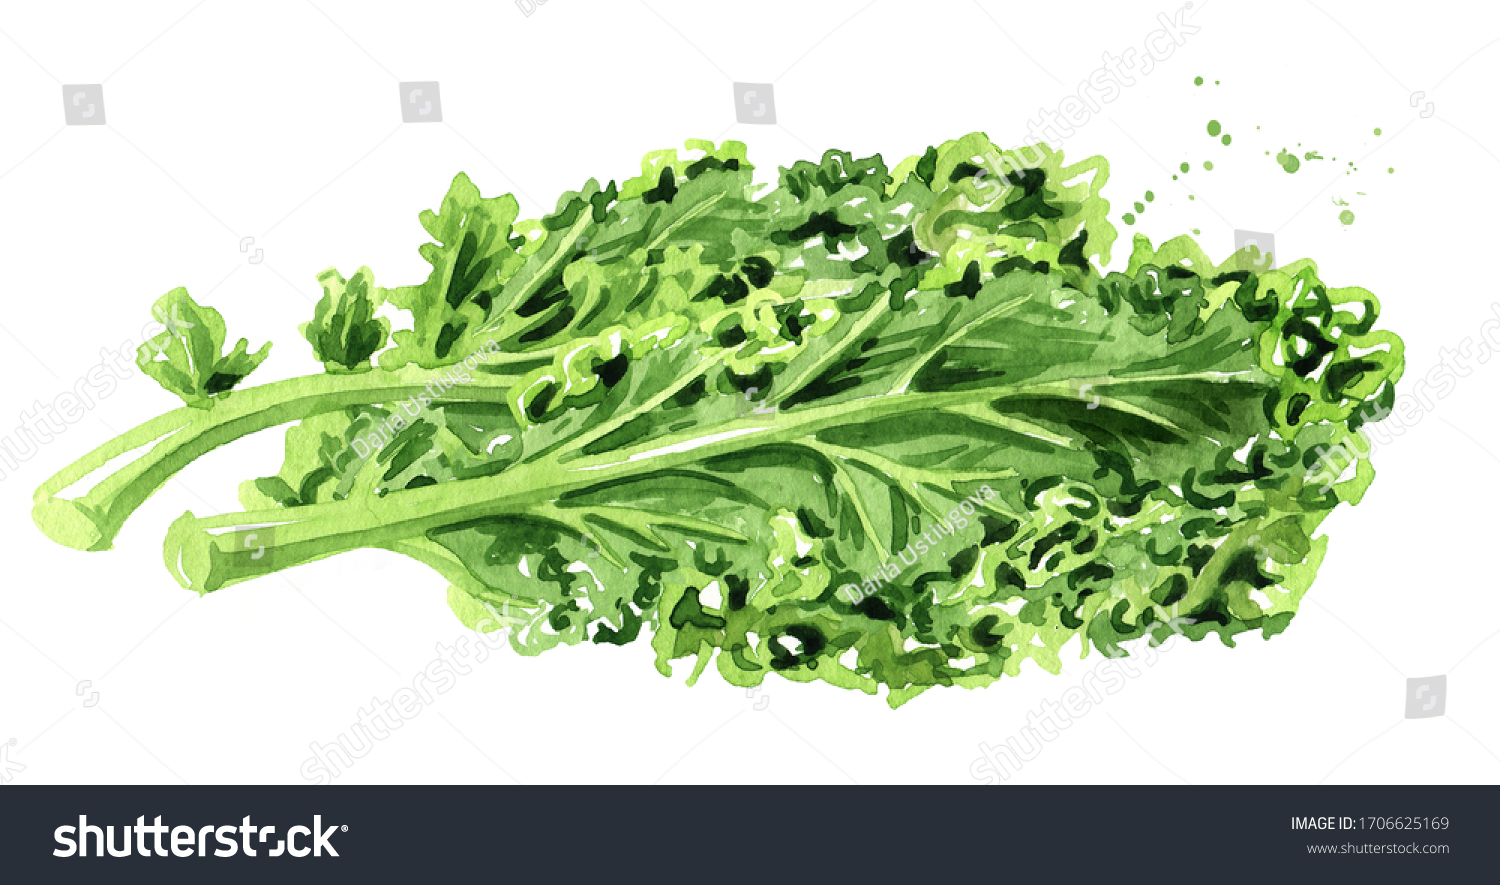 925 Kale watercolor Images, Stock Photos & Vectors | Shutterstock